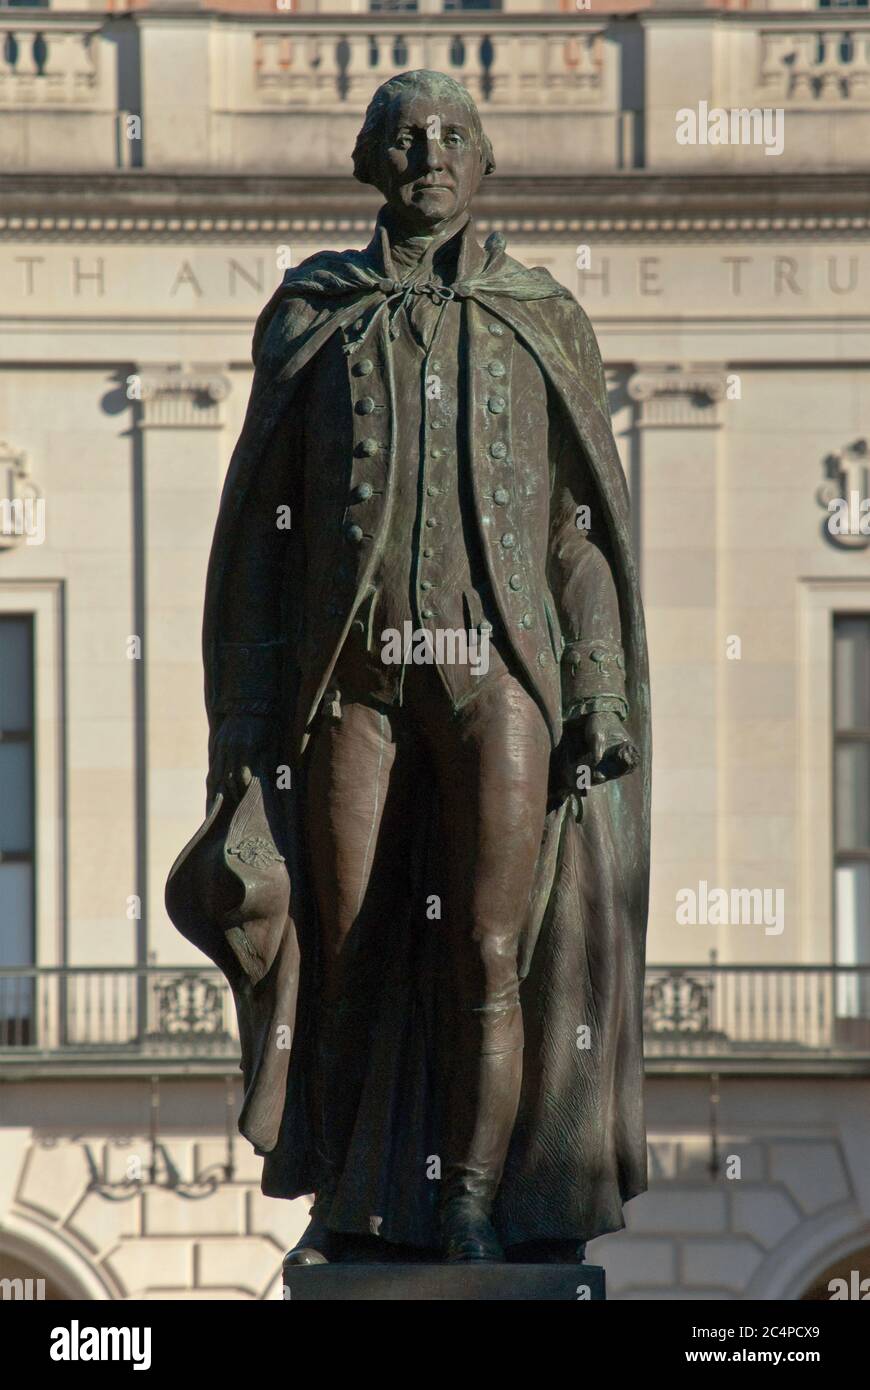 George Washington statue at Texas Tower, Main Campus of University of Texas, Austin, Texas, USA Stock Photo